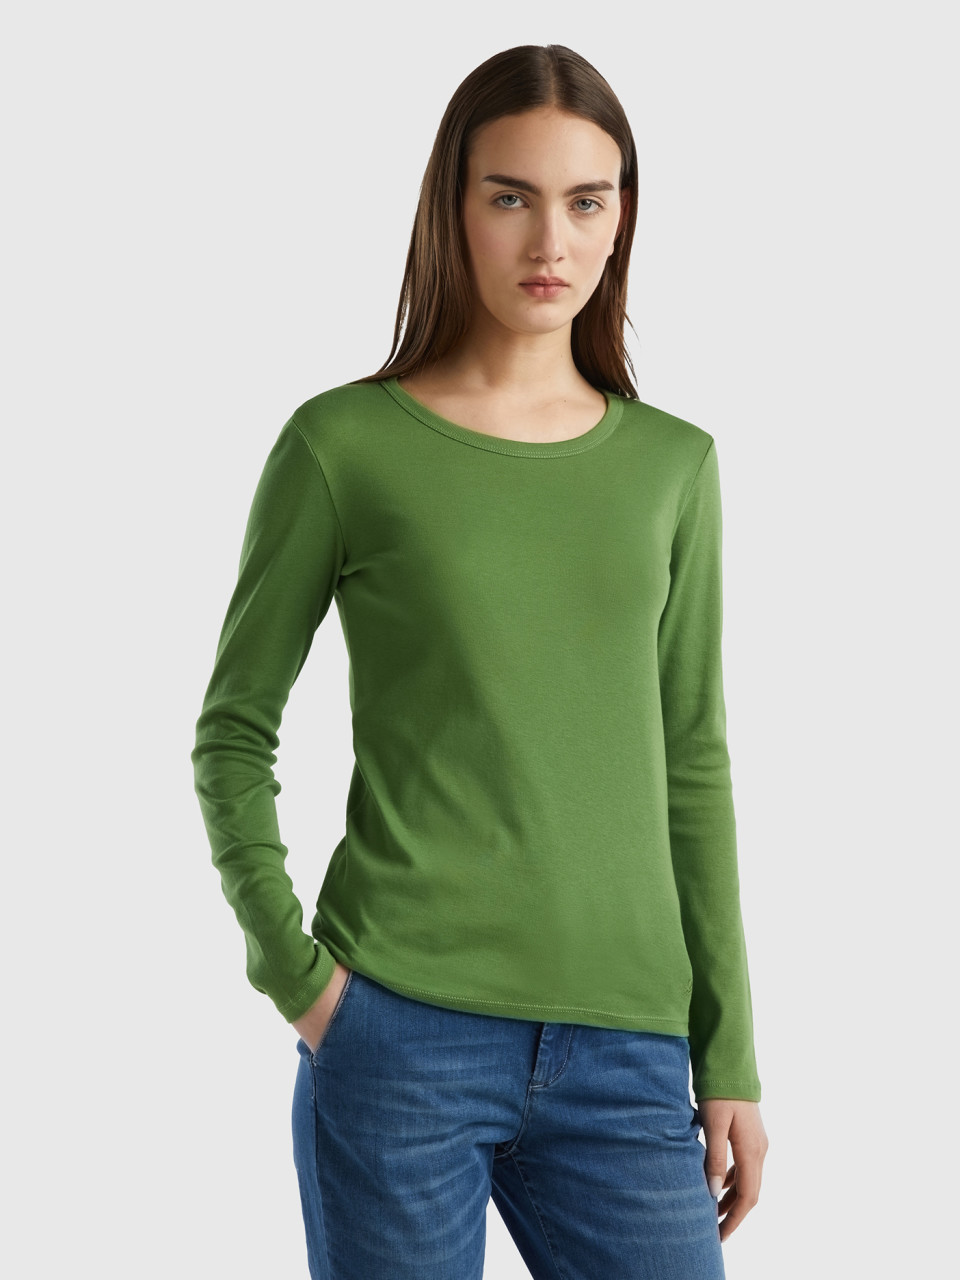 Benetton, Long Sleeve Pure Cotton T-shirt, Military Green, Women